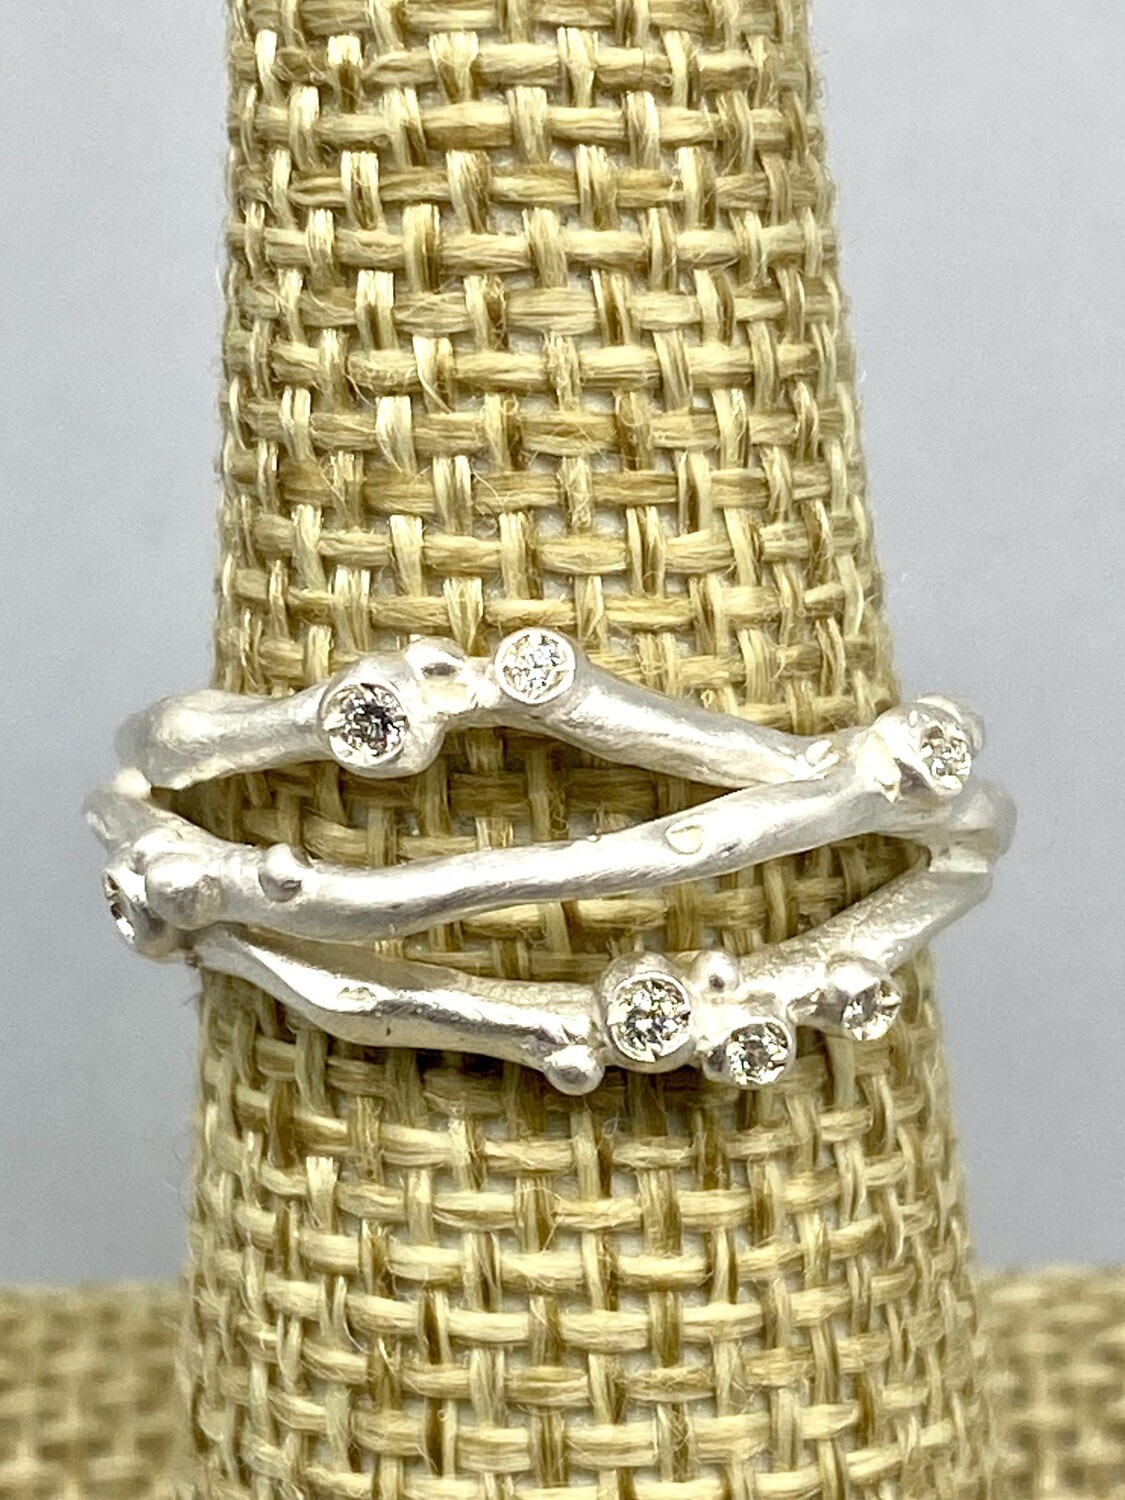 Sz 7 Encrusted 3 Branch Ring w/Diamonds, Sterling Silver - Branch Jewelry - Venice CA